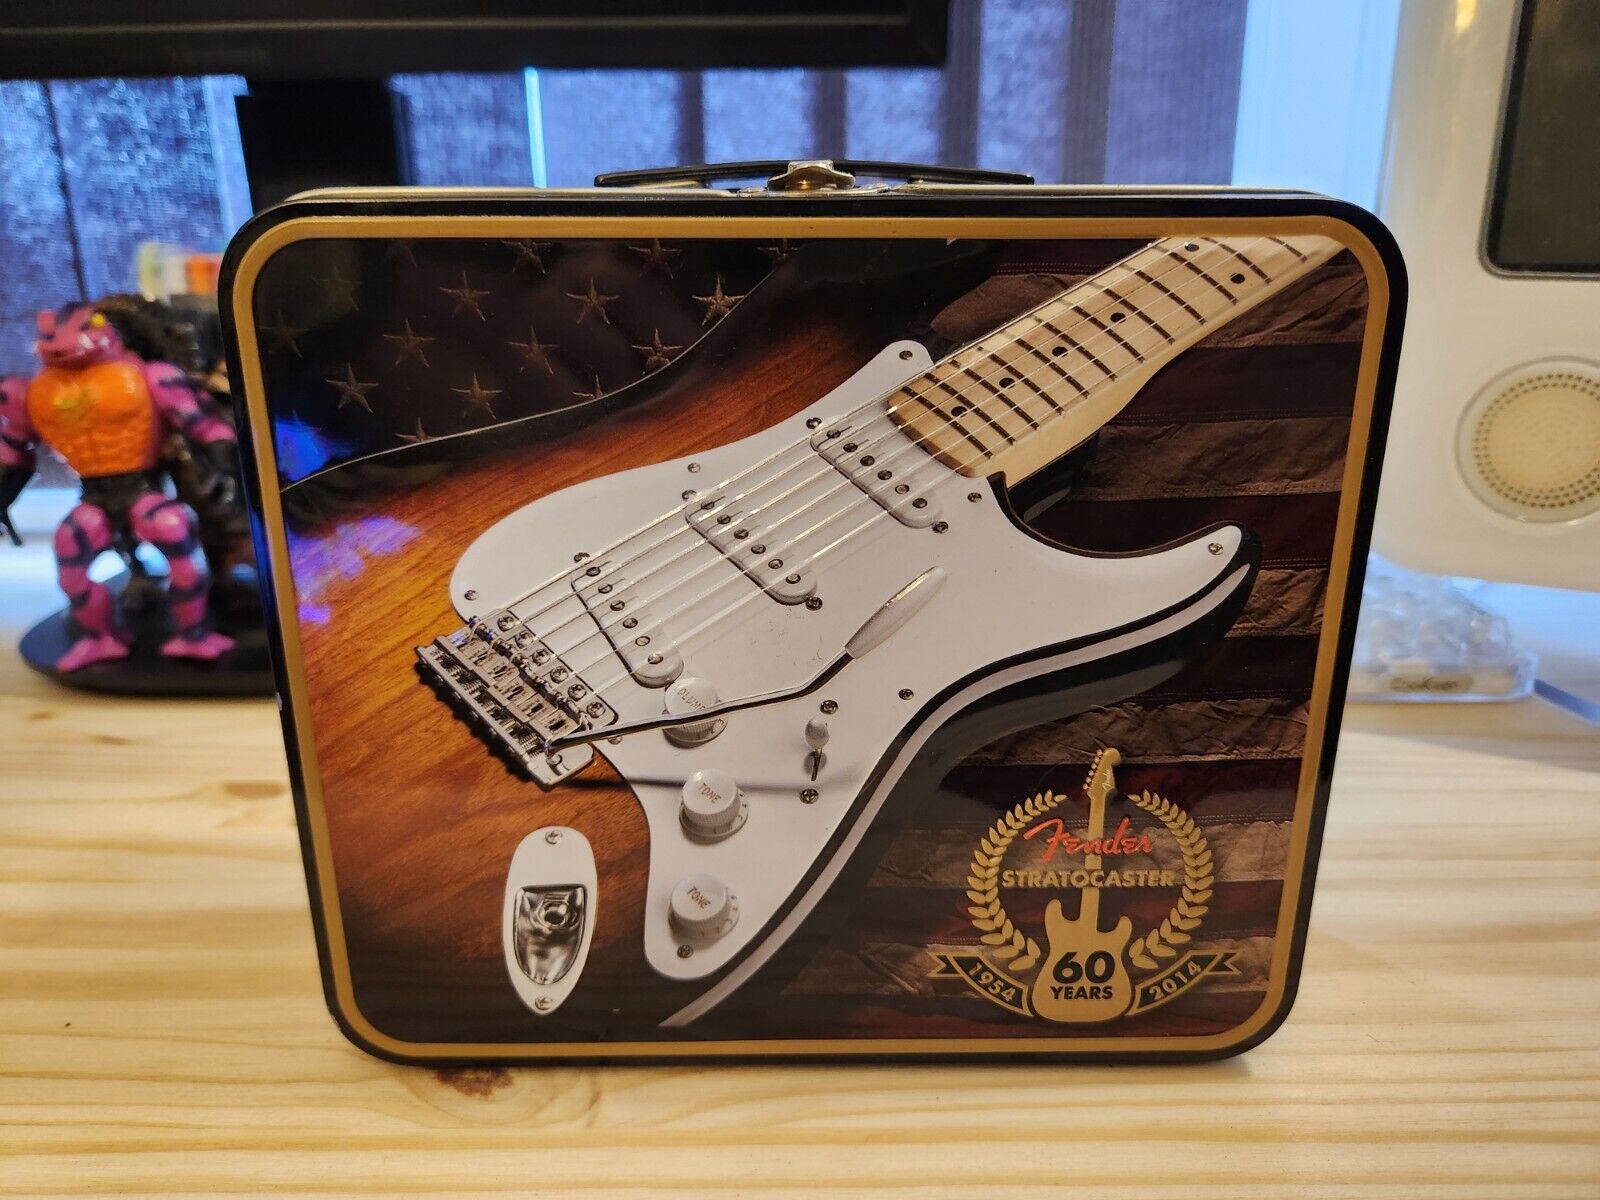 2014 Aladdin Fender Stratocaster Metal Lunchbox 60 Years Anniversary 1954 - 2014